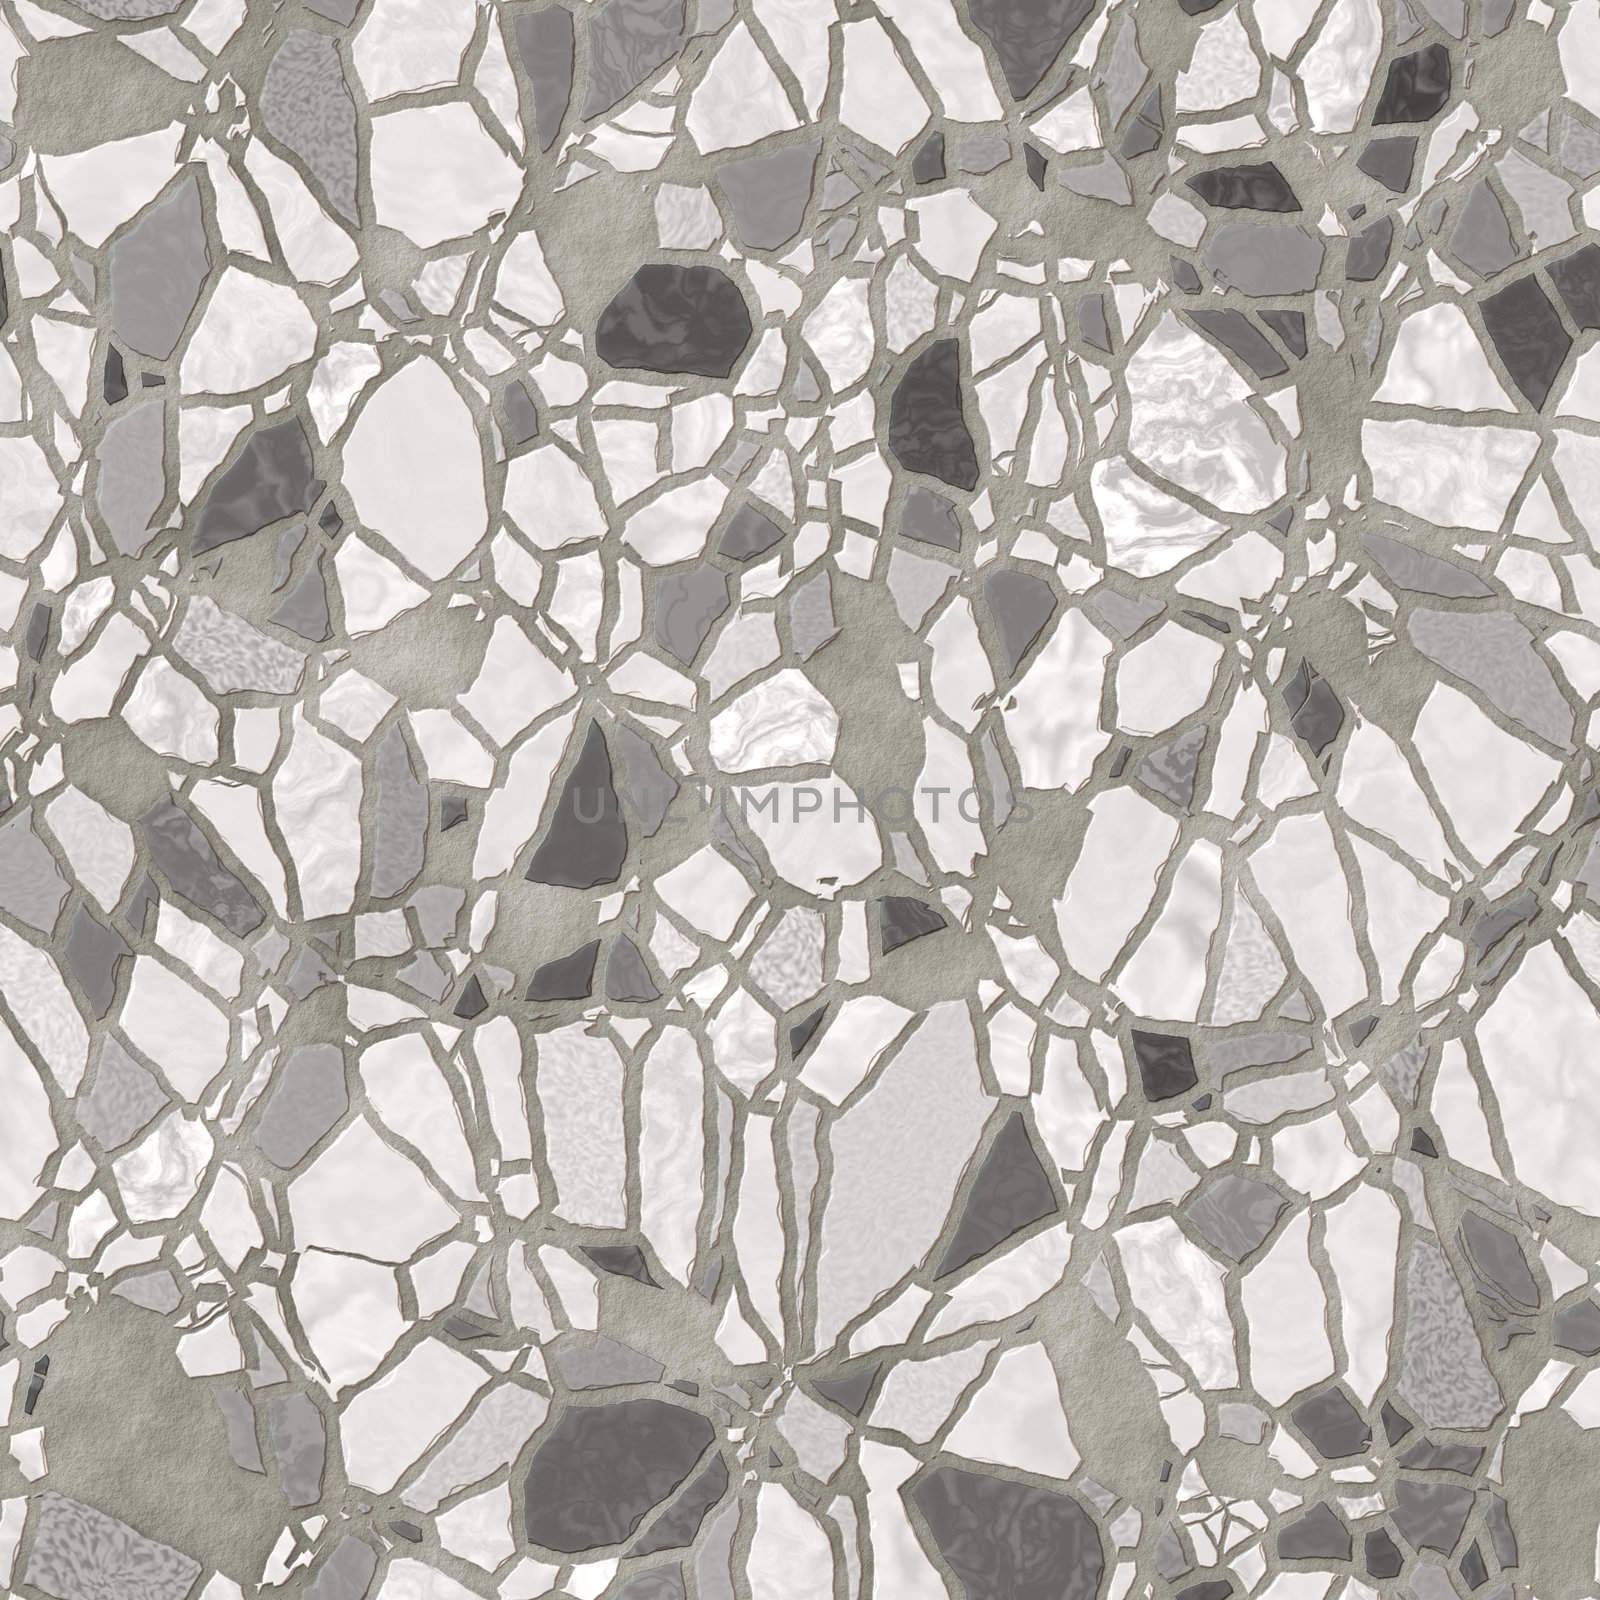 An illustration of a seamless texture tiles